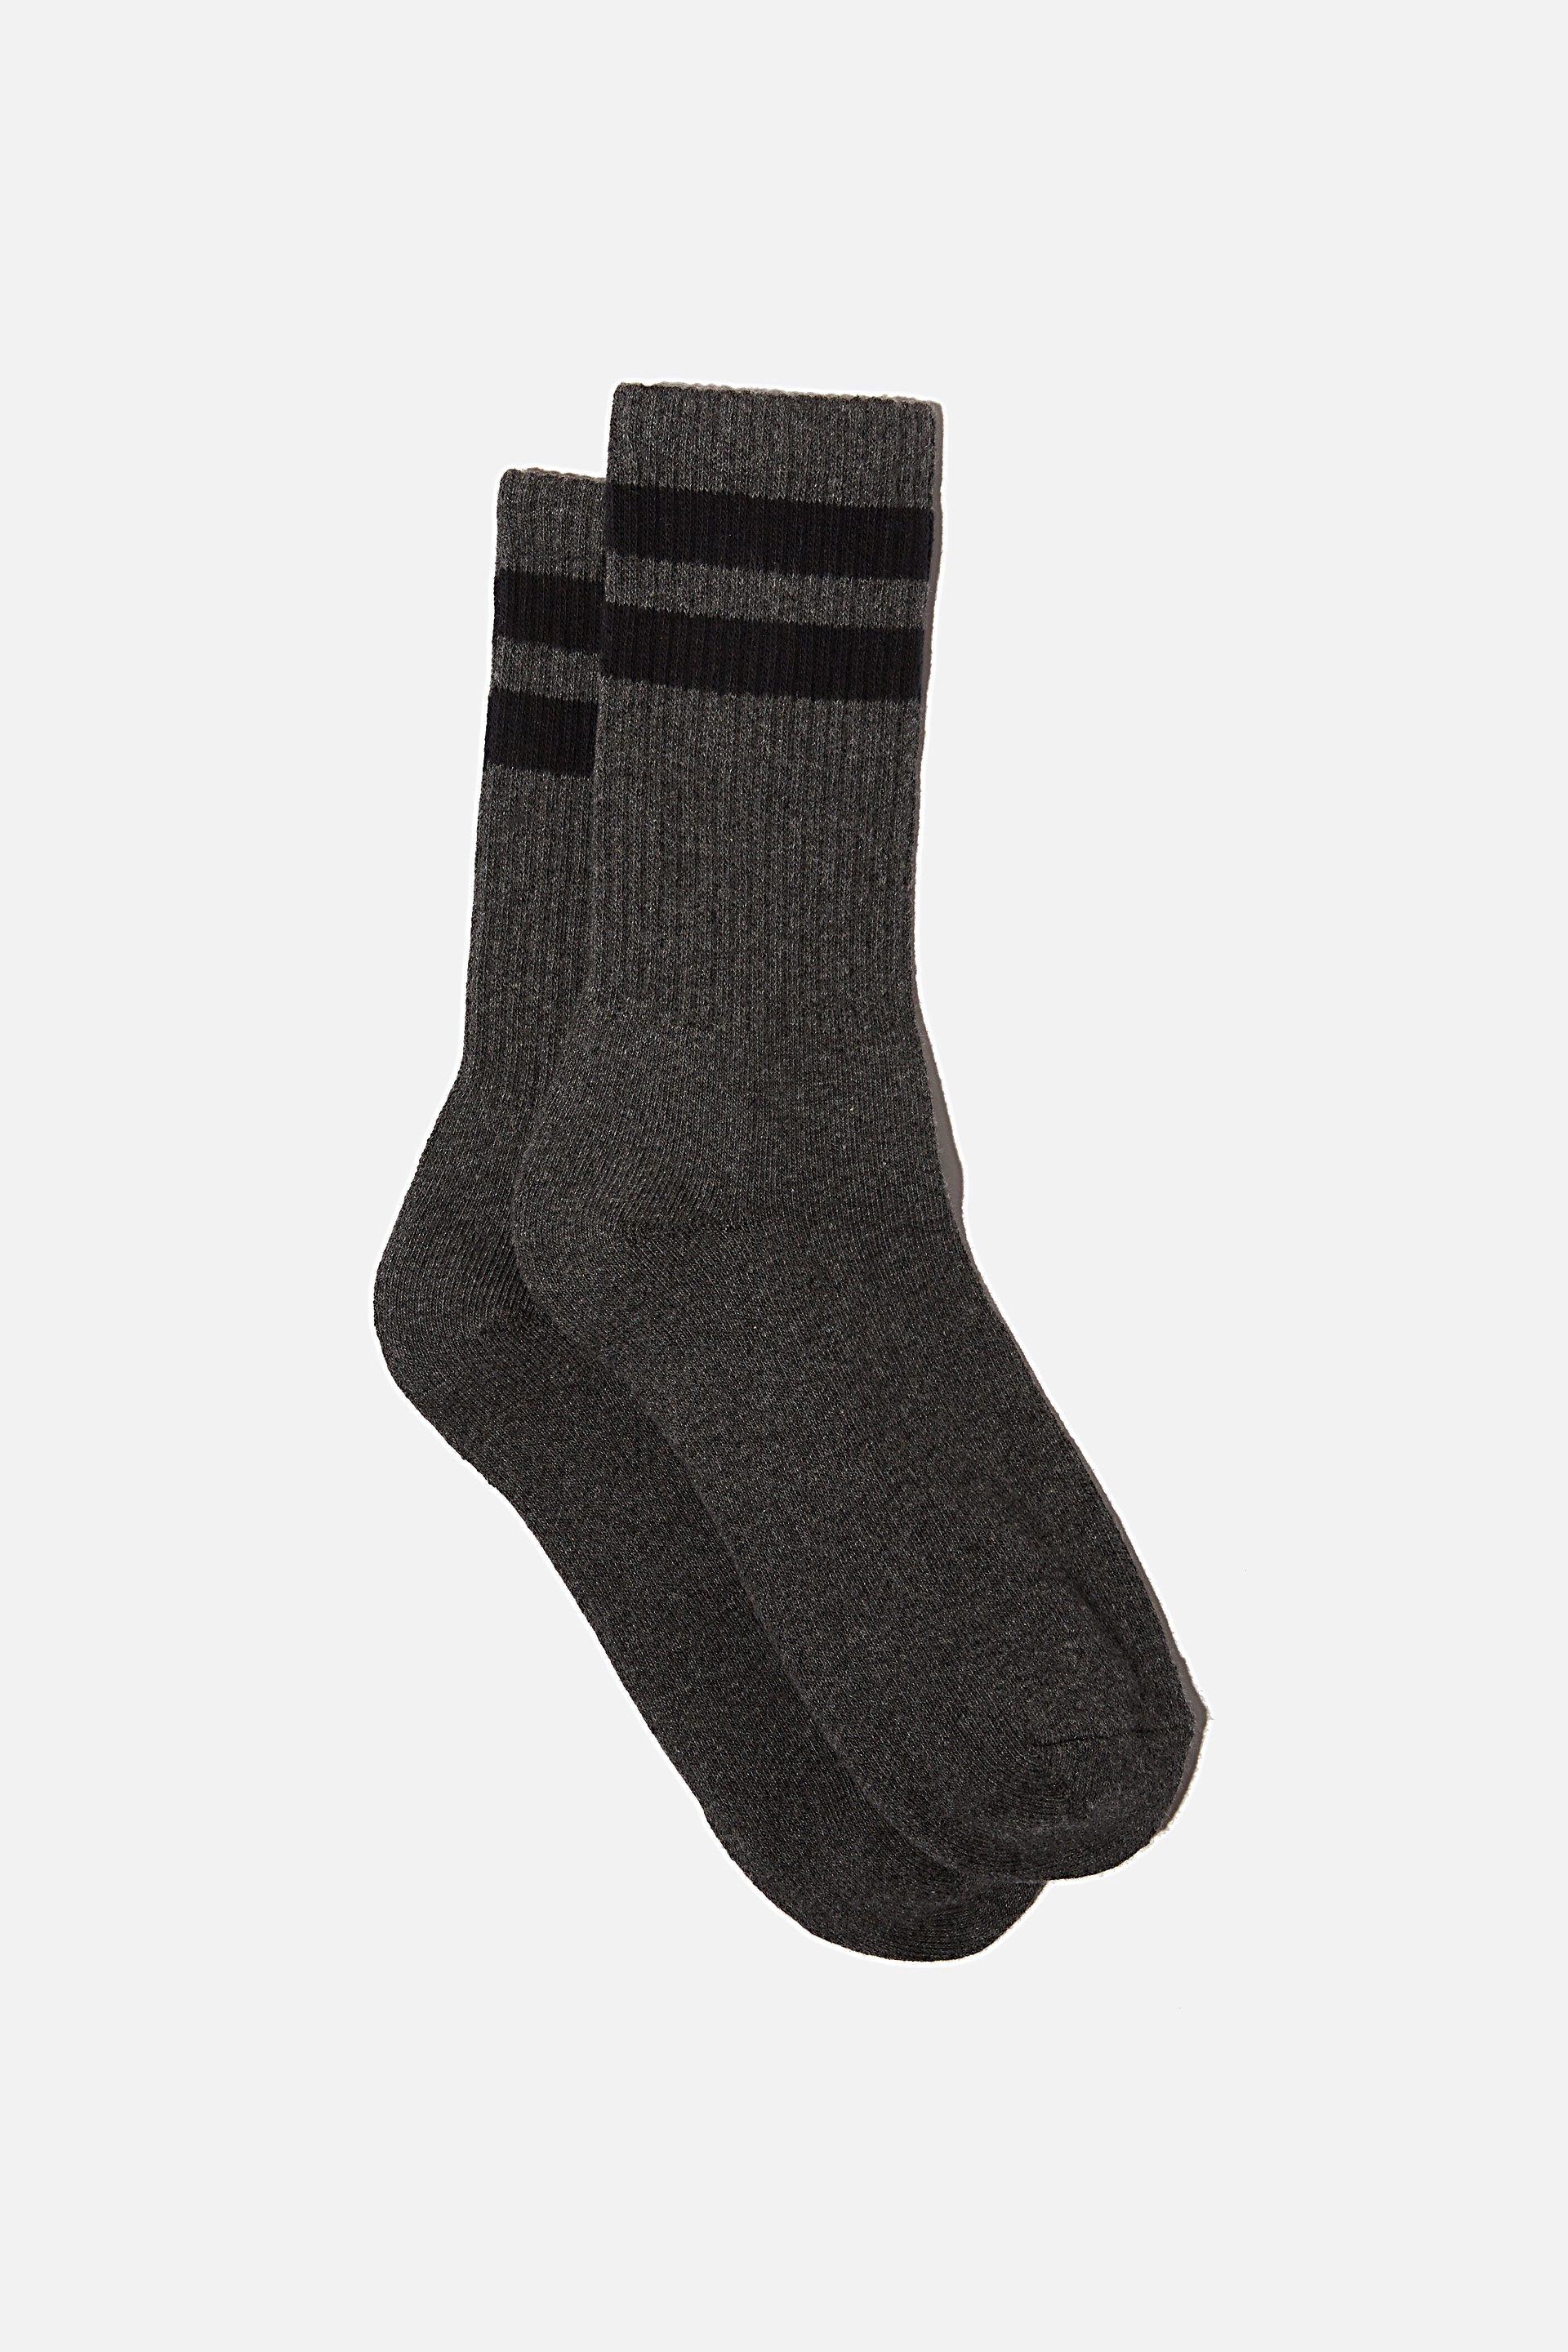 Cotton On Men - Essential Sock - Charcoal marle/black sport stripe